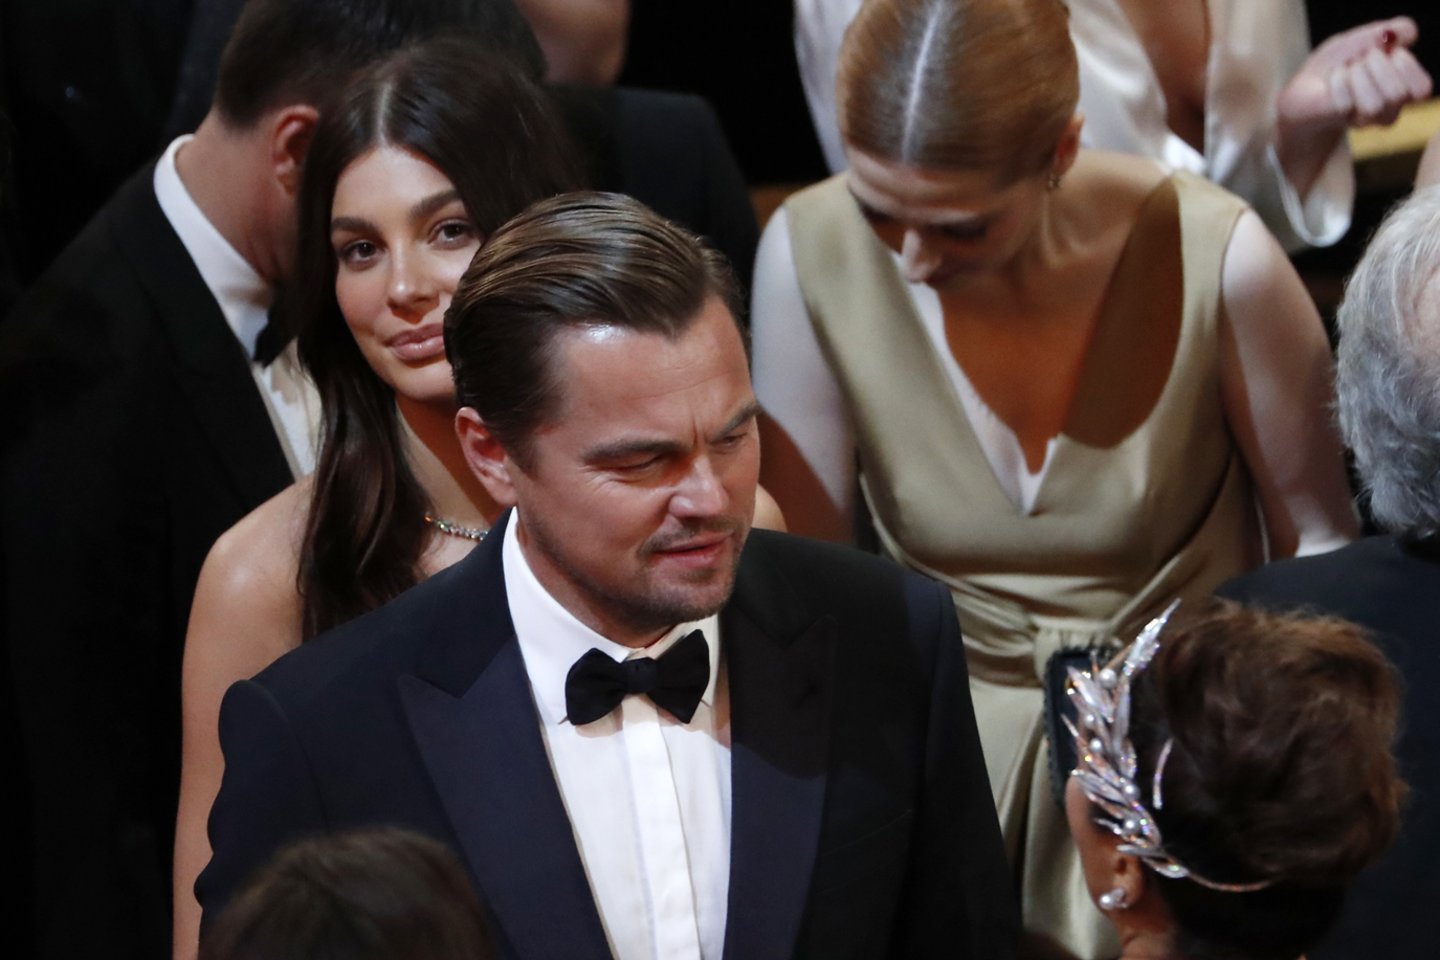   Leonardo DiCaprio užfiksuotas drauge su žavia 22-mete Camila Morrone.<br> Scanpix nuotr.